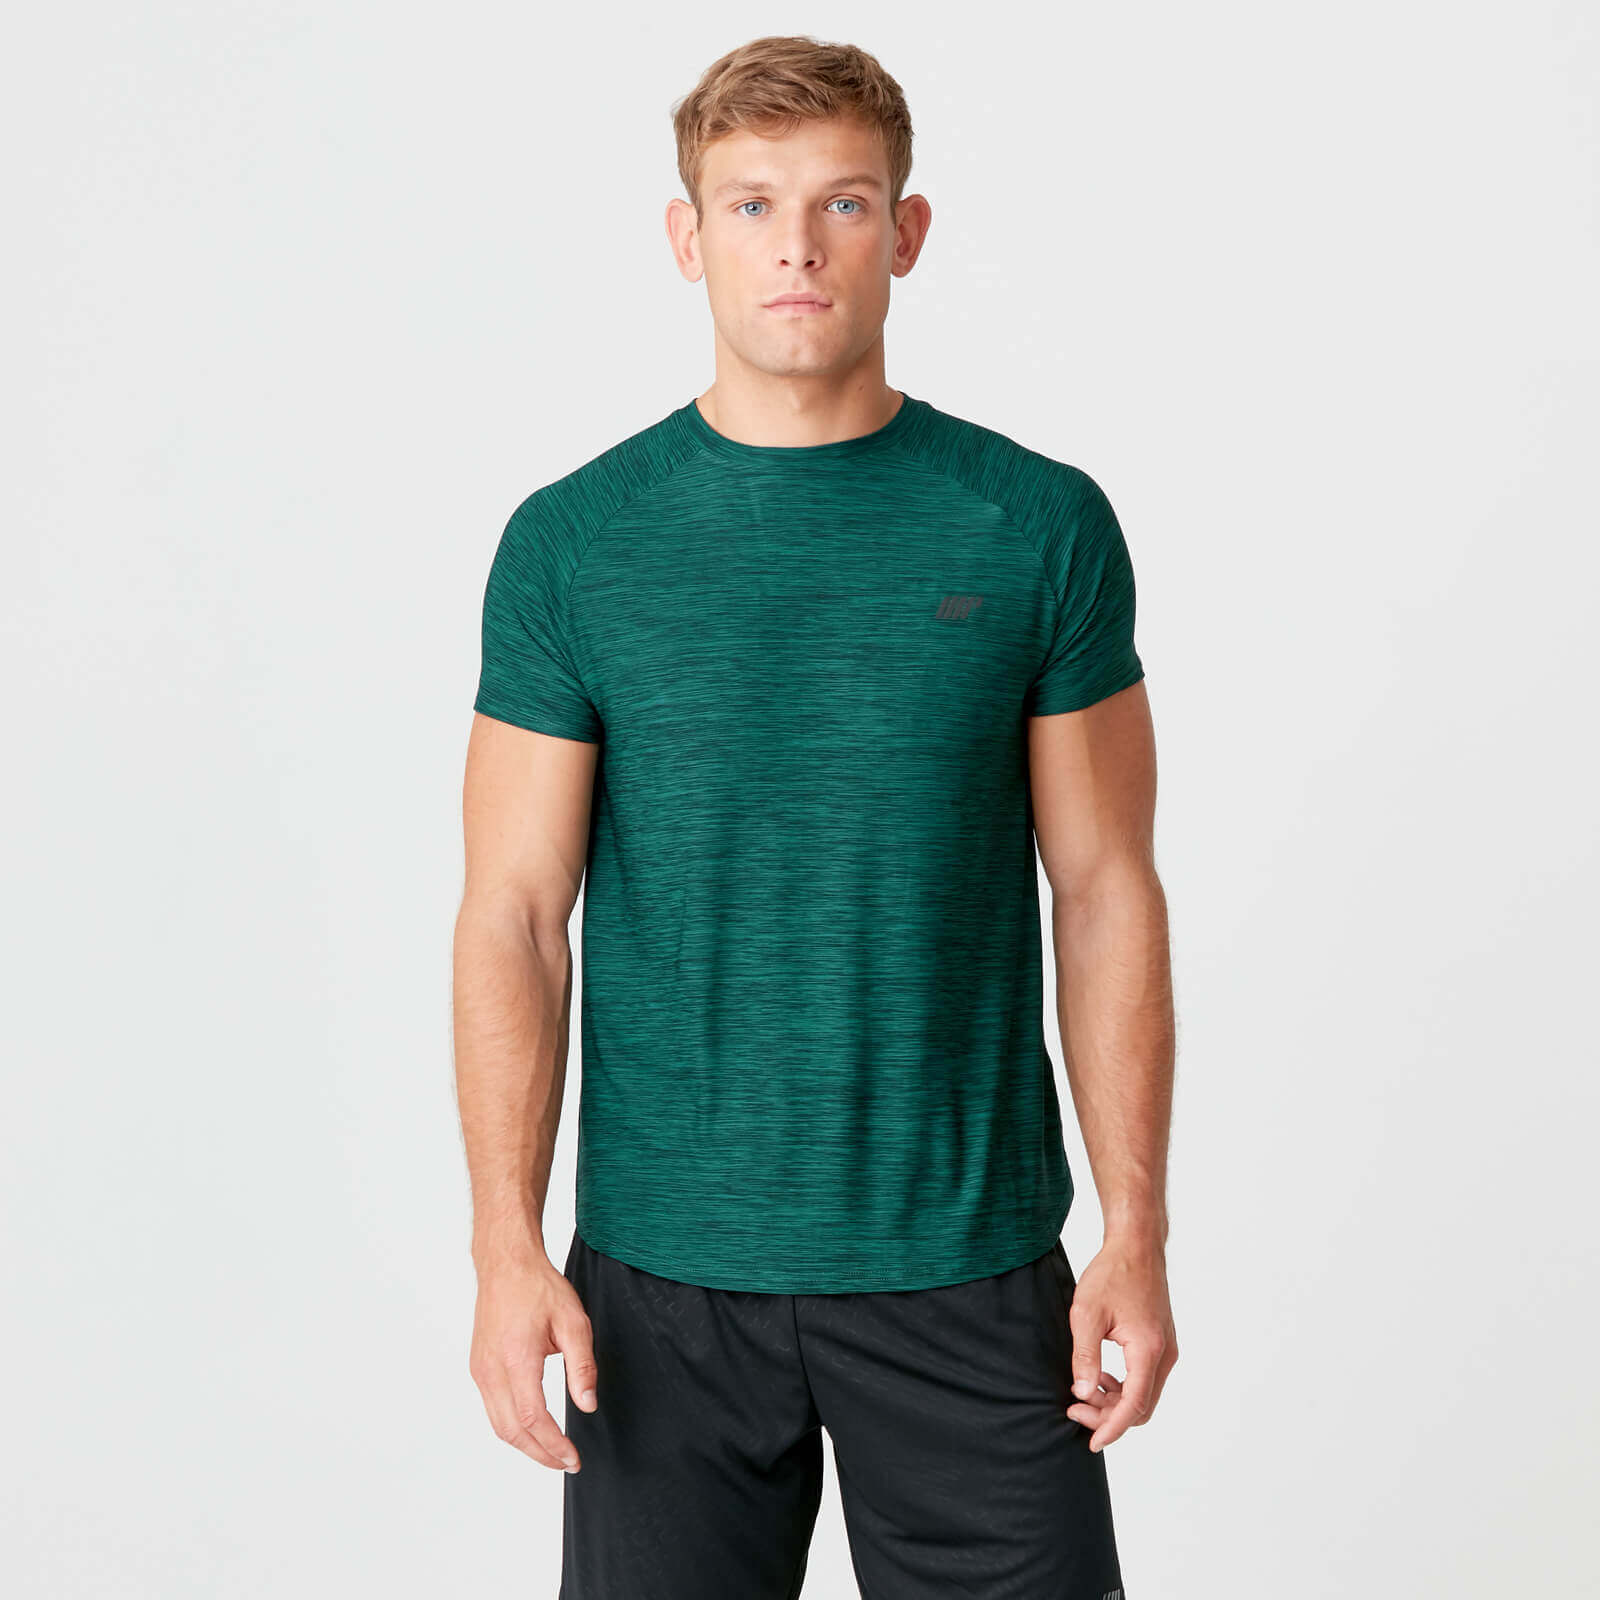 Dry Tech 速乾系列 男士運動健身T恤 - 深綠 - XS